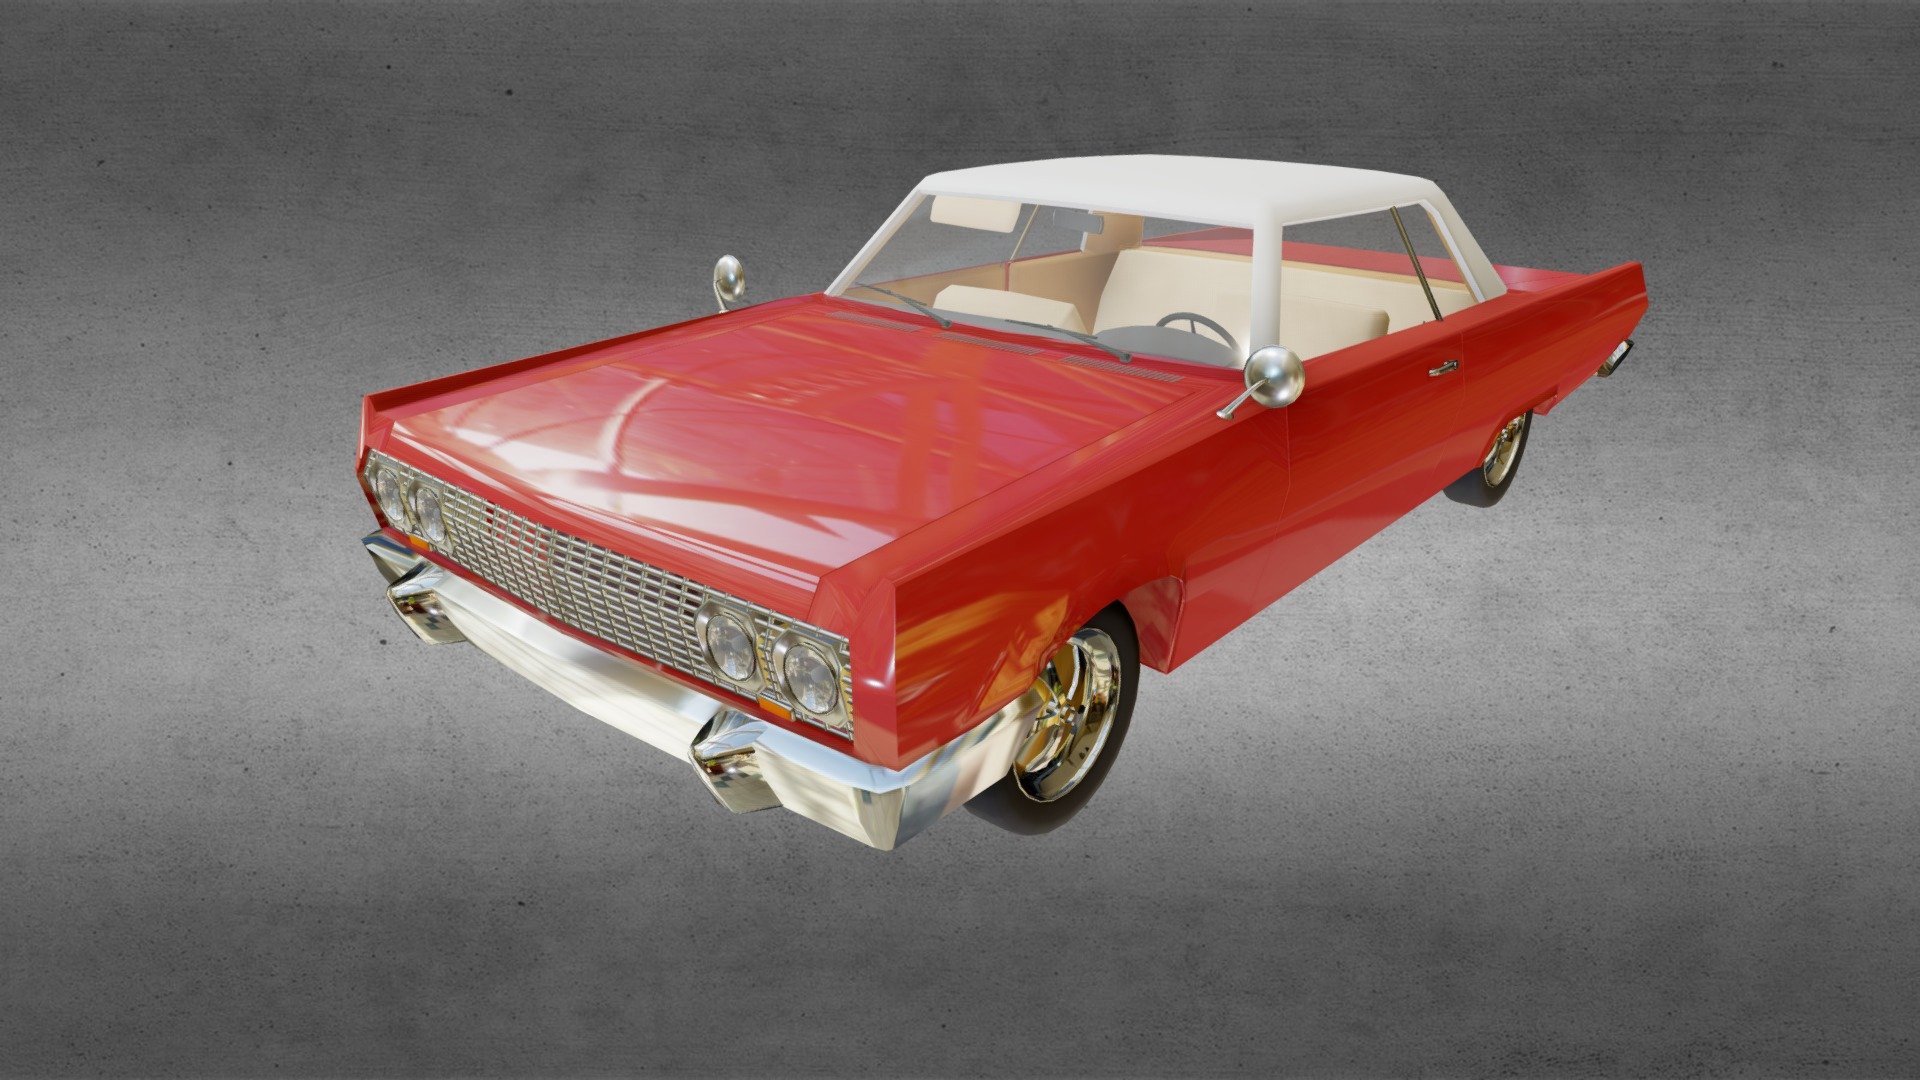 Chevrolet Impala 1963 - Home Work 7 (anatomy)